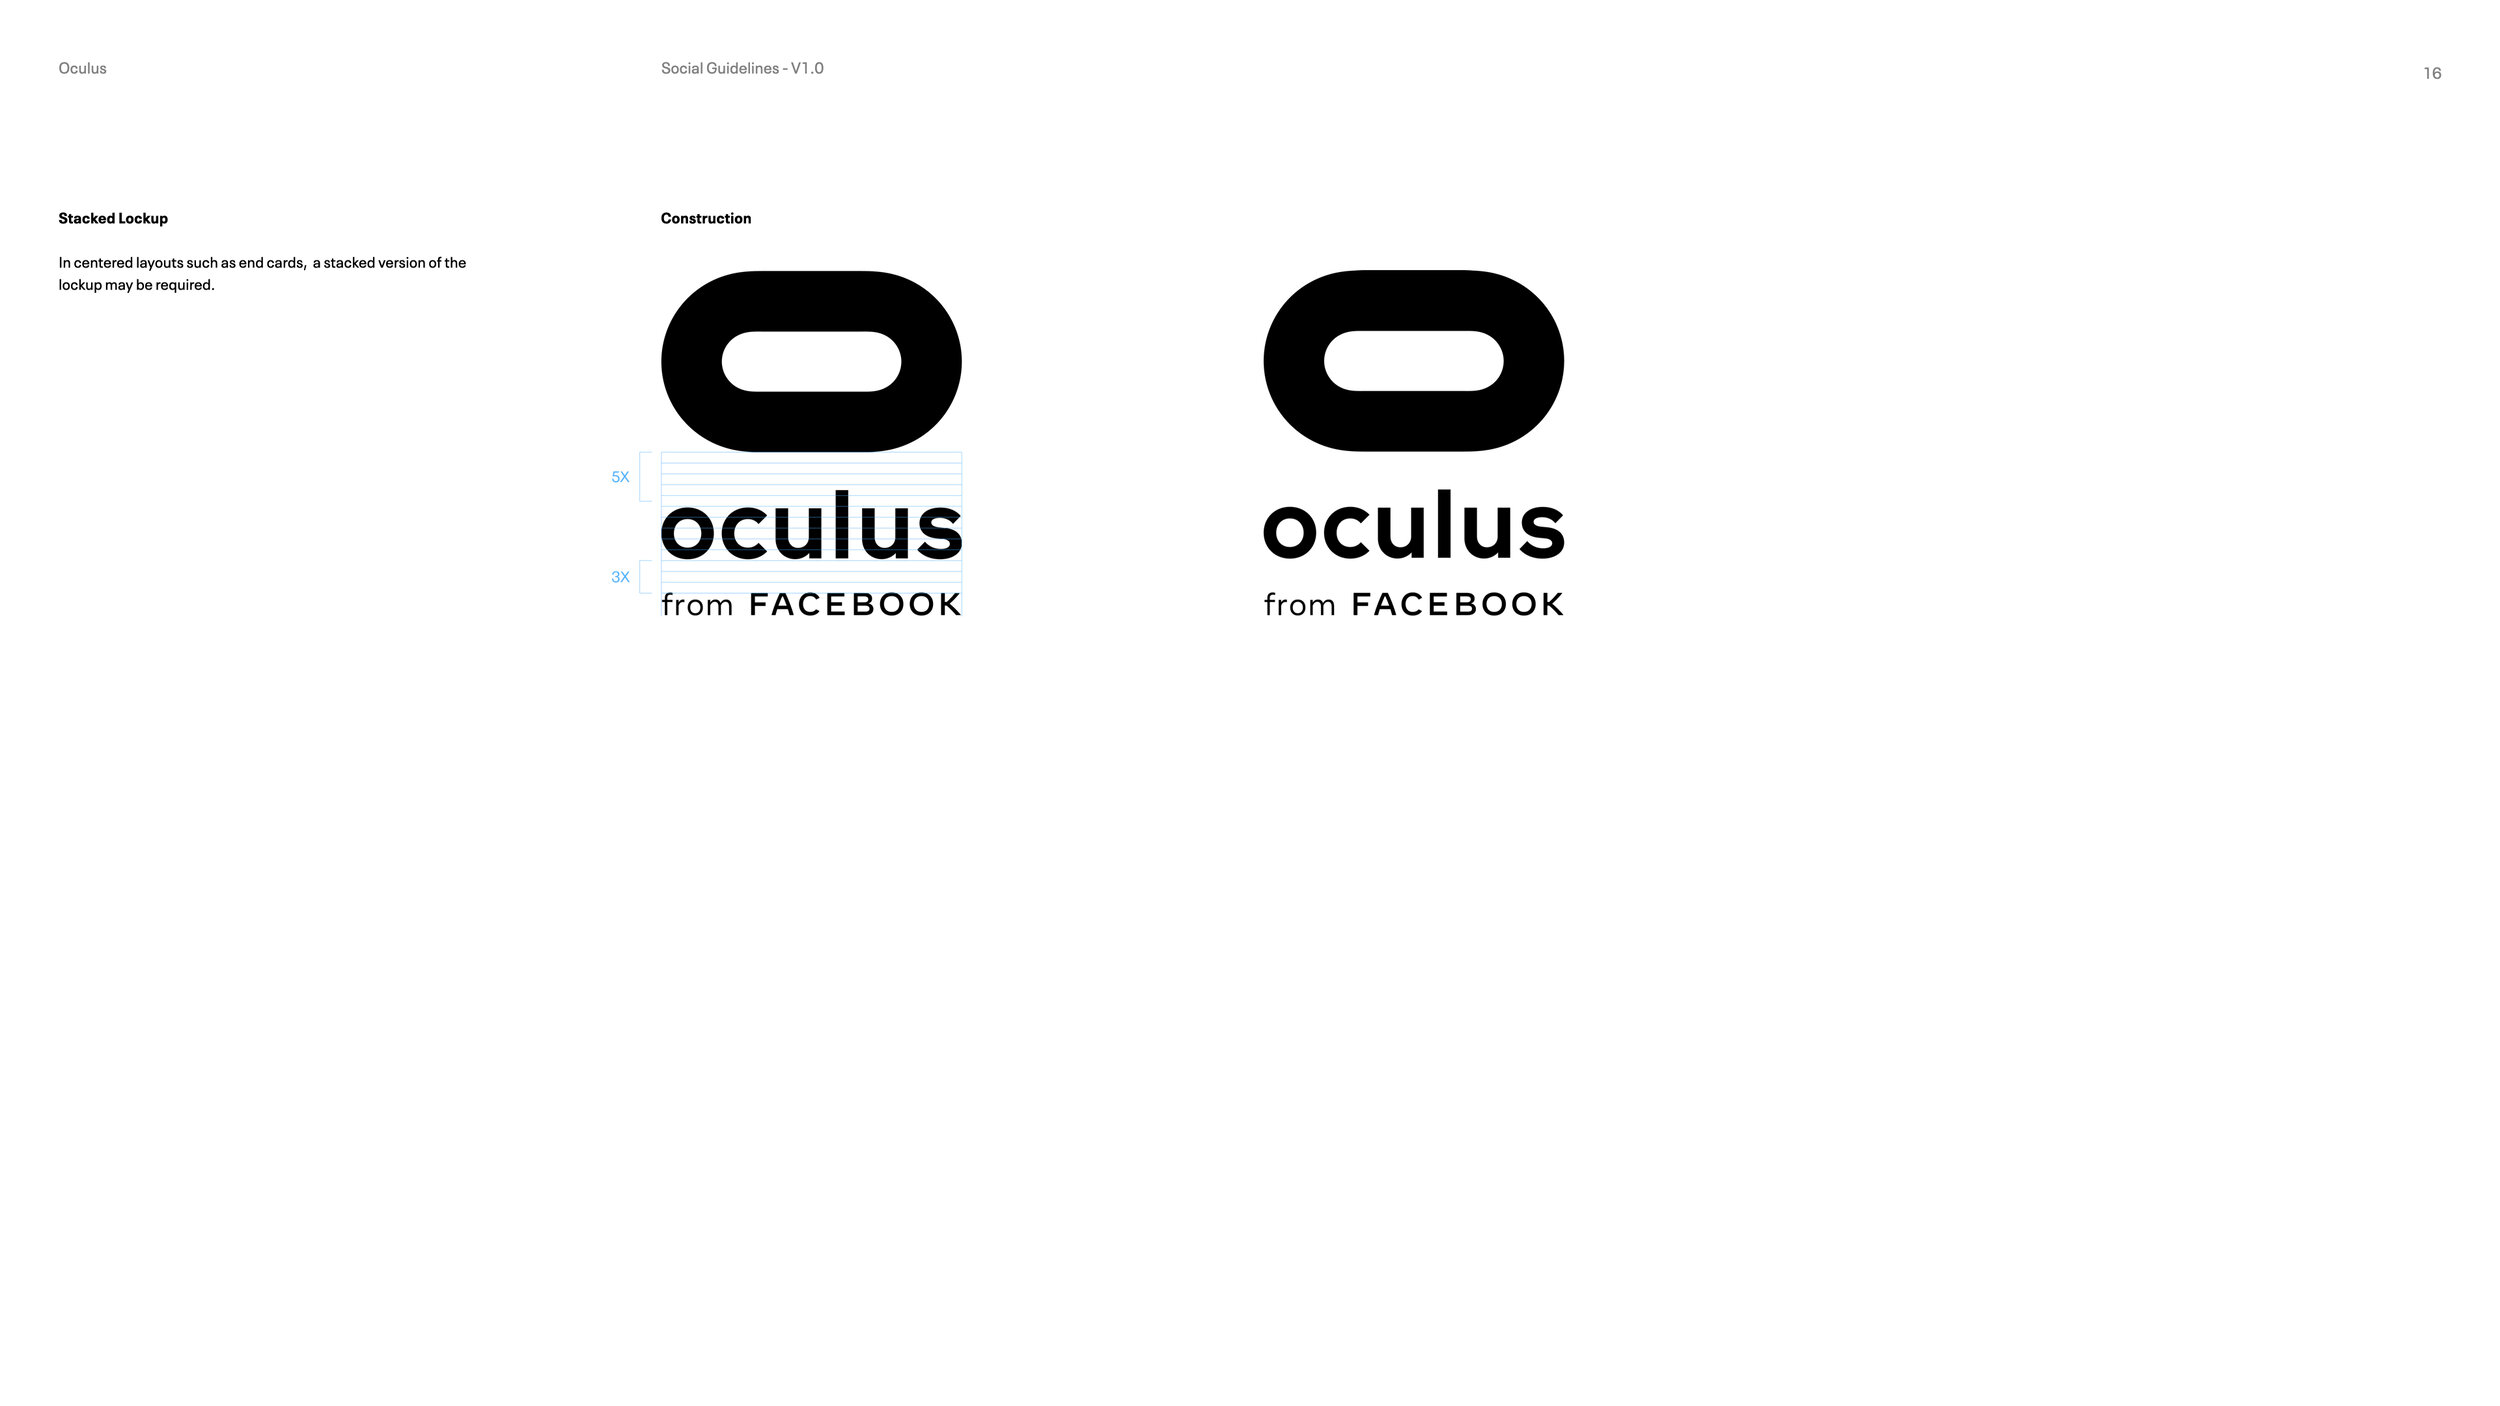 2020_10_13_Oculus_Social_Guidelines (1).016.jpeg